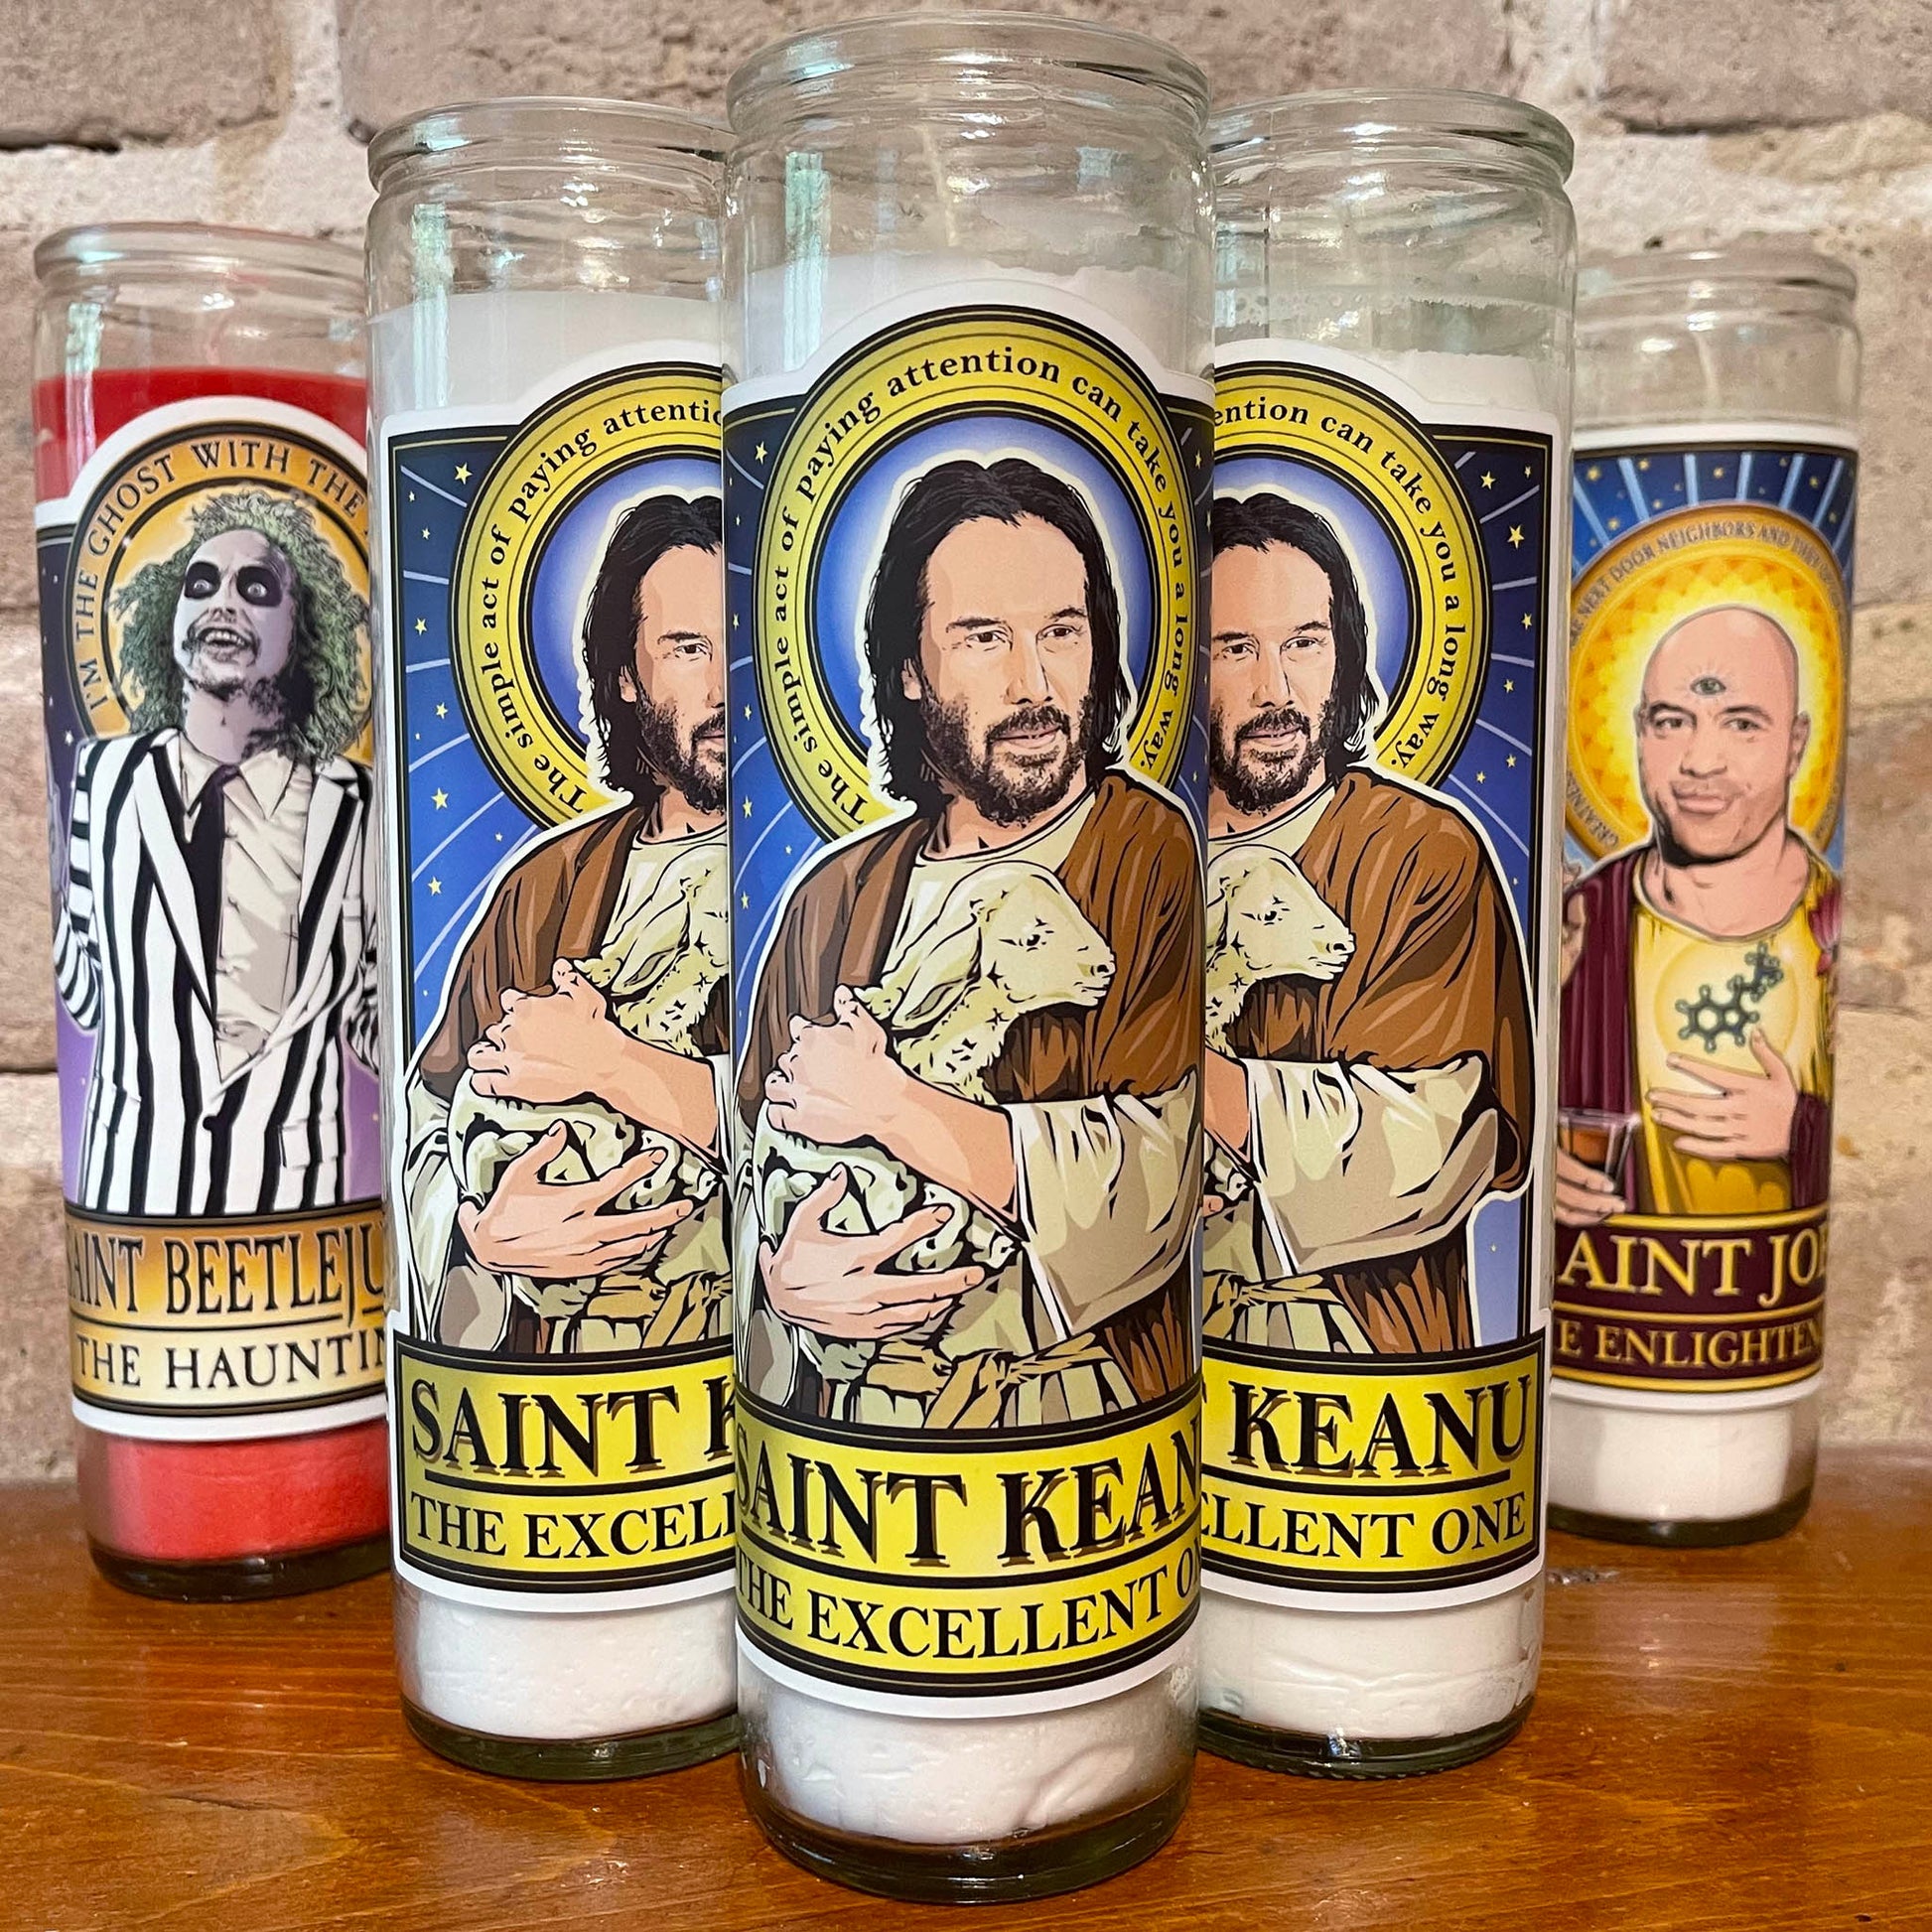 Saint Keanu Candle Cleaverandblade.com